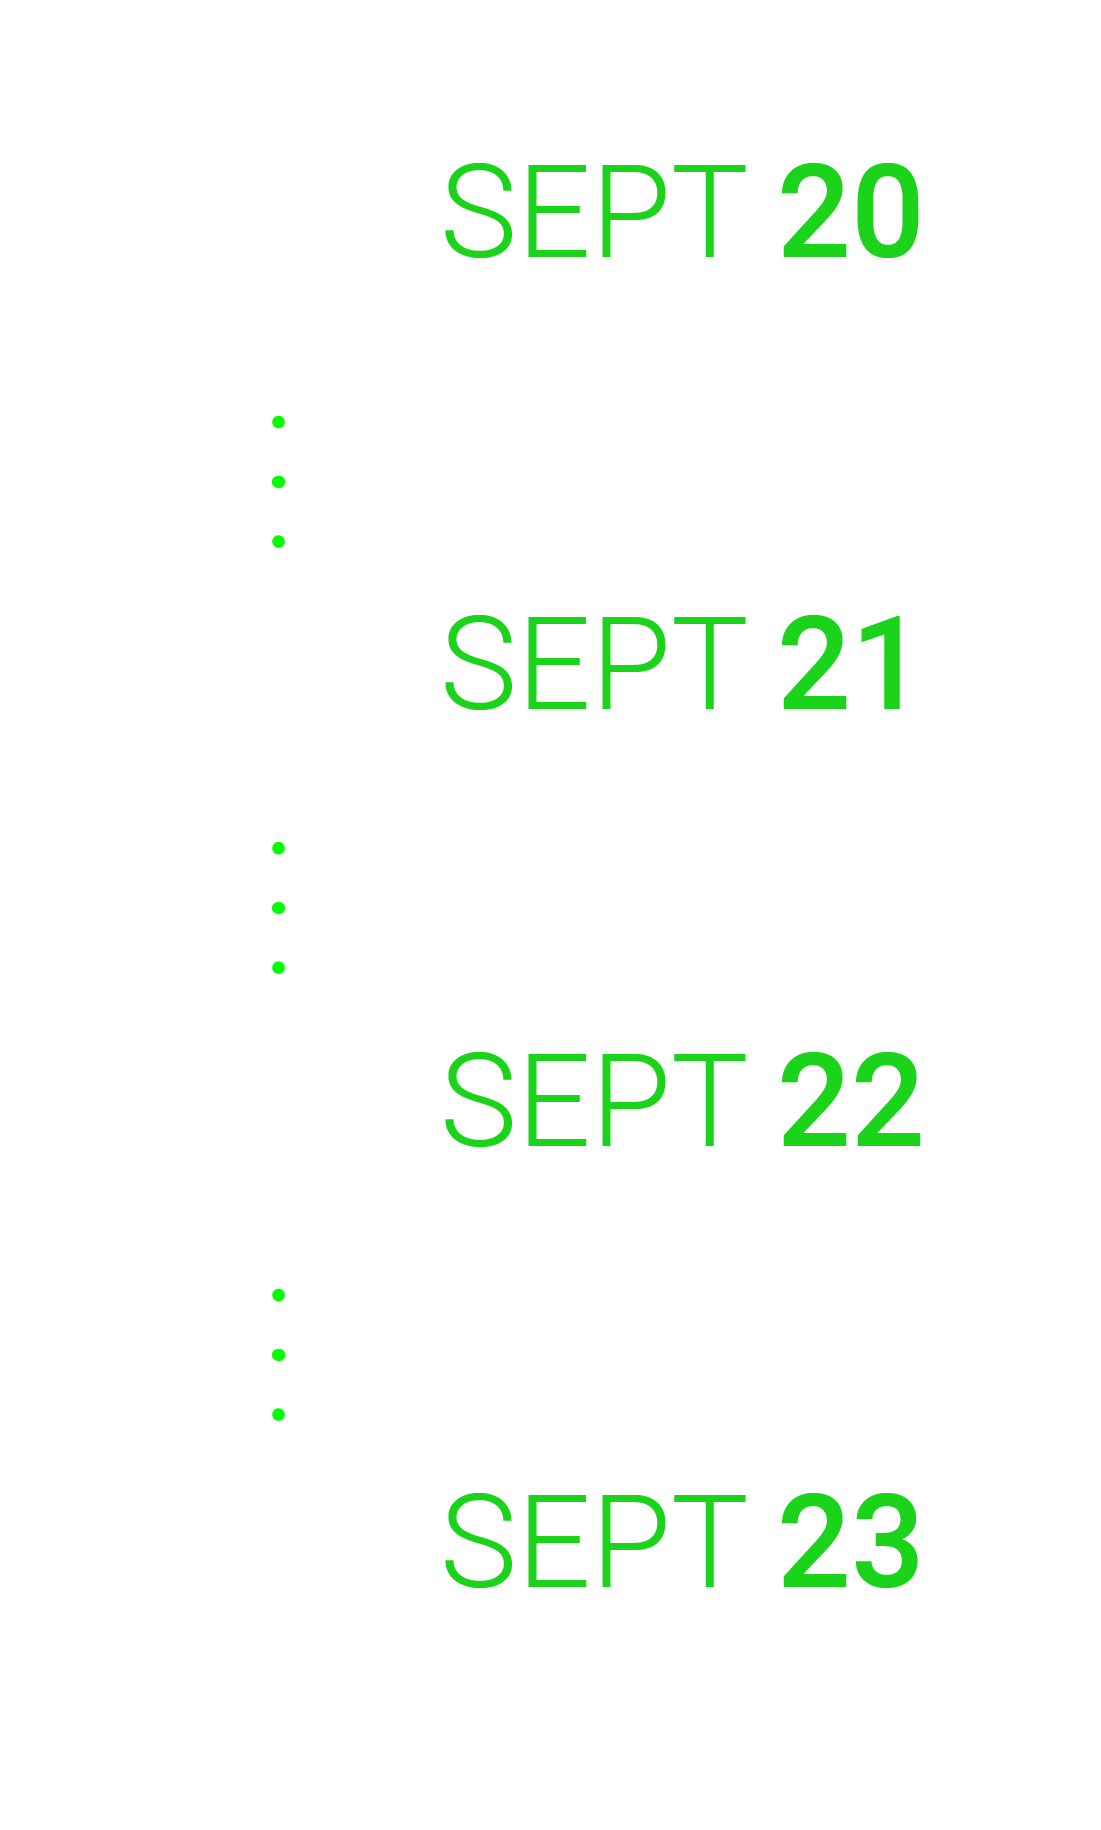 timeline graphic for BLK Autonomy Week webinars